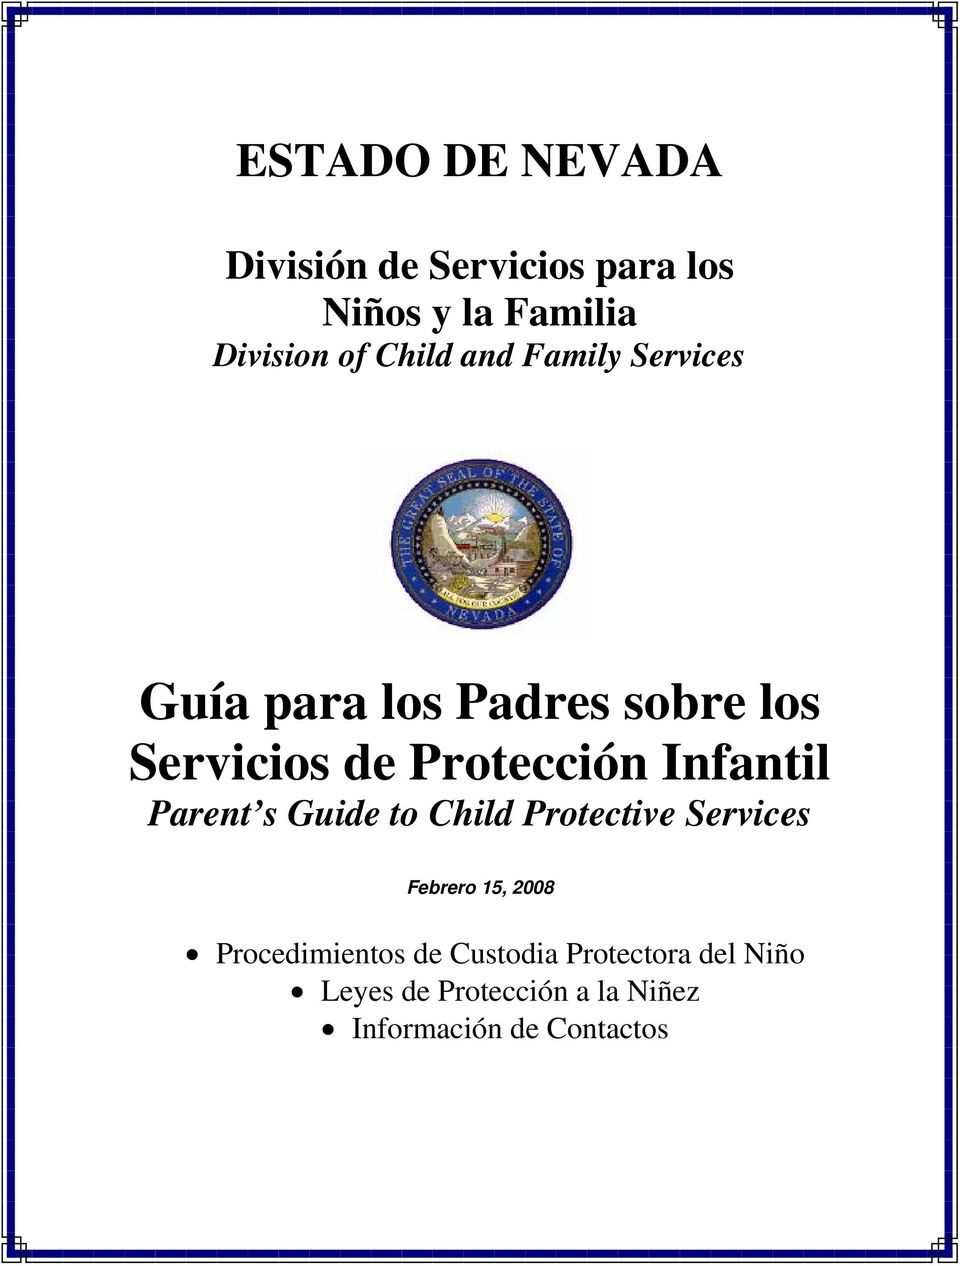 Infantil Parent s Guide to Child Protective Services Febrero 15, 2008